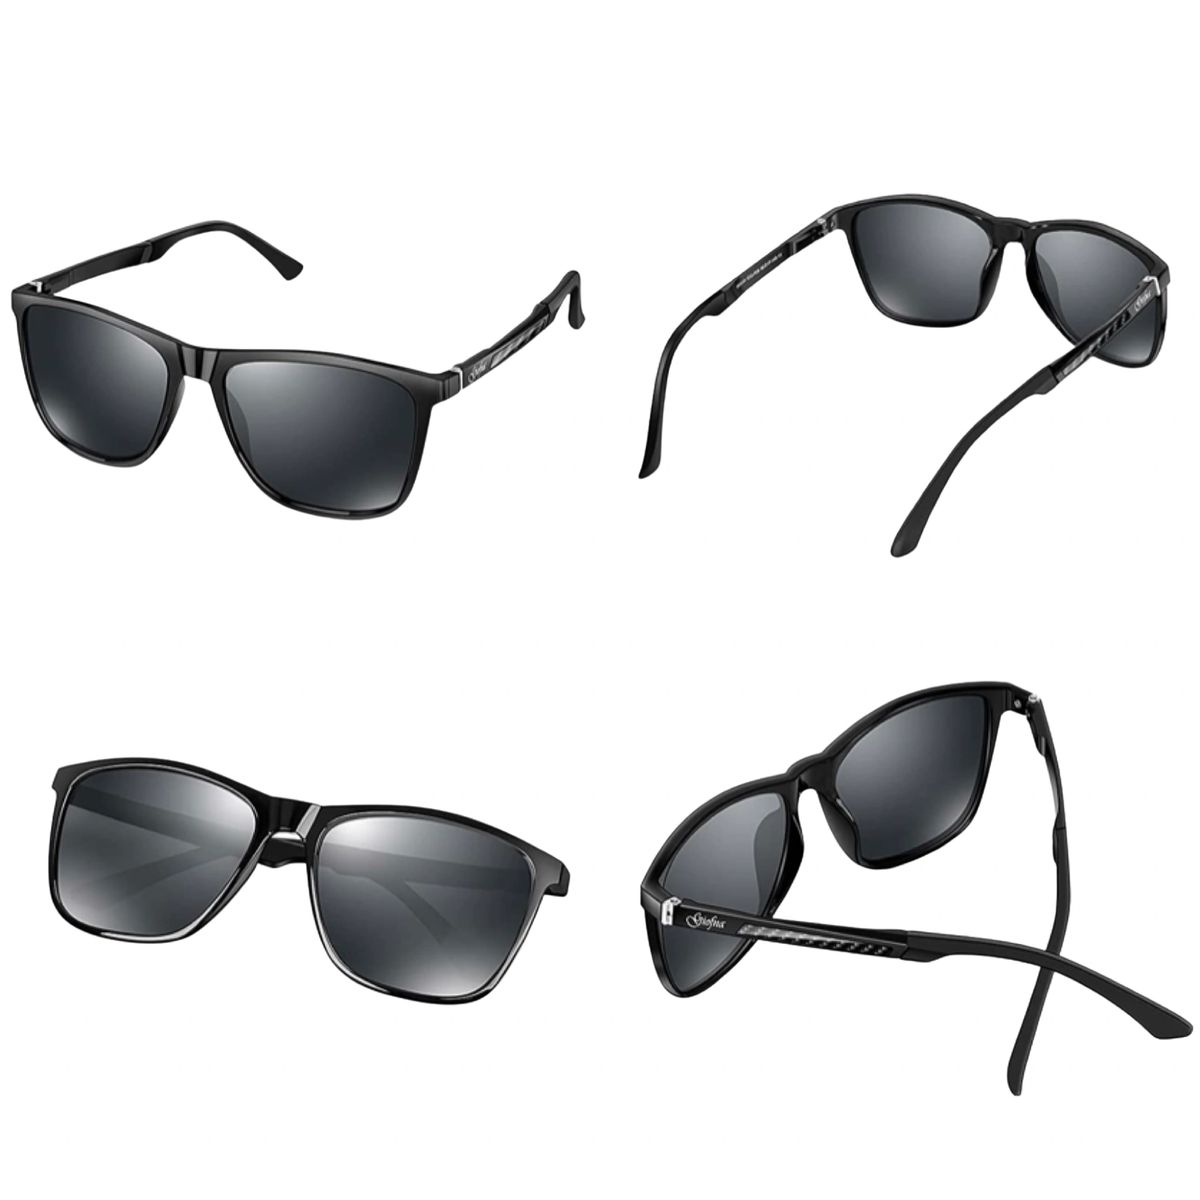 ZPSPZ sunglasses Polarized sunglasses Polarized driving womens sunglasses UV protection 